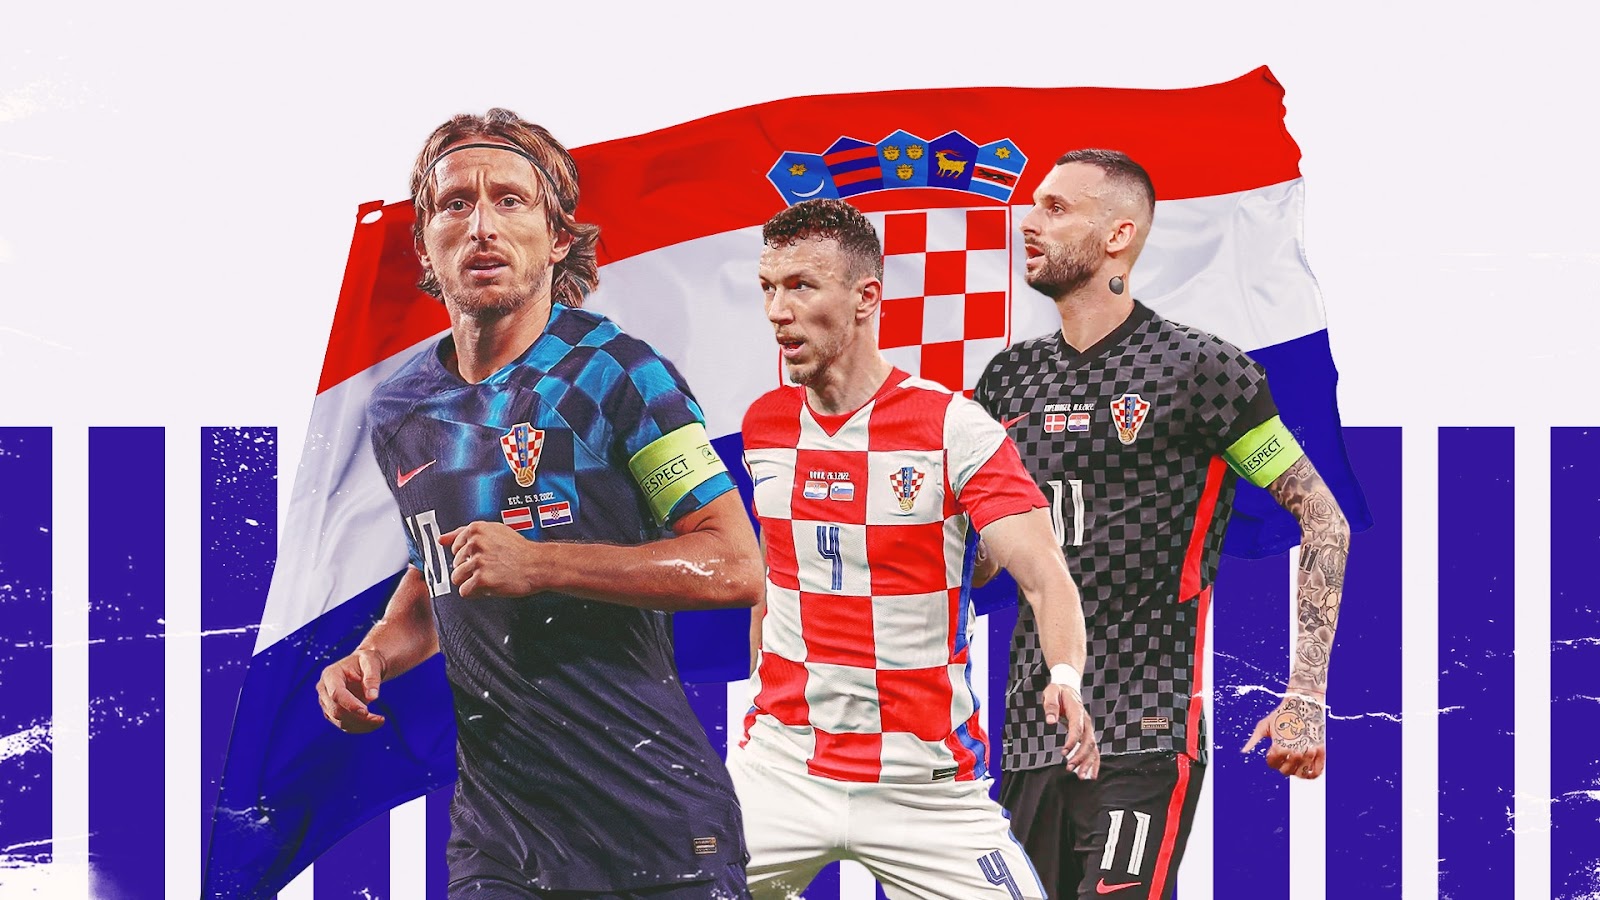 Nhận Định Soi Kèo Đội Hình Croatia Tại World Cup 2022 HsiIg3zwup57g3wx5H2iXaXhaxBCVDcWjCAAqkJqfzHVCjmgbe37rZRHll_1R-OefdqCRFNfBY_IE8RRYbGVt-yWrhlmcKwQloLLWIjvxvSoFJSwiRKLVXz4GCRmi8S6ORy_B78PCrKahb44UXw9Oyump8mbZnqIT5BlJUD-4OymLJSsSxf8wcSQNE-xBA